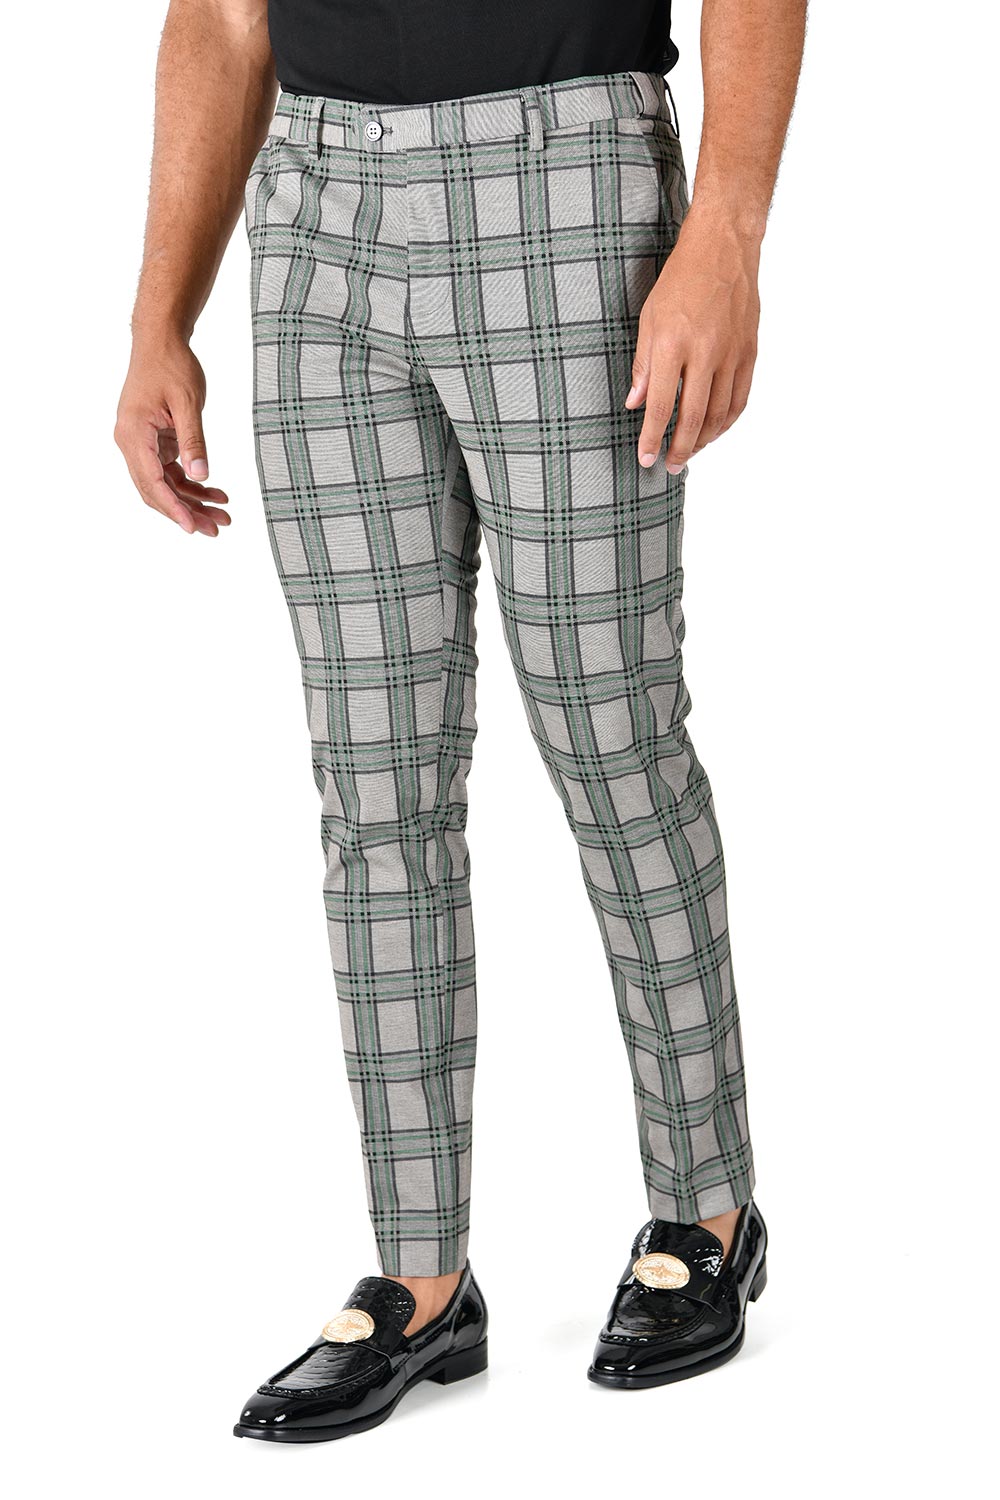 BARABAS men's checkered plaid light grey chino dress pants CP130 green